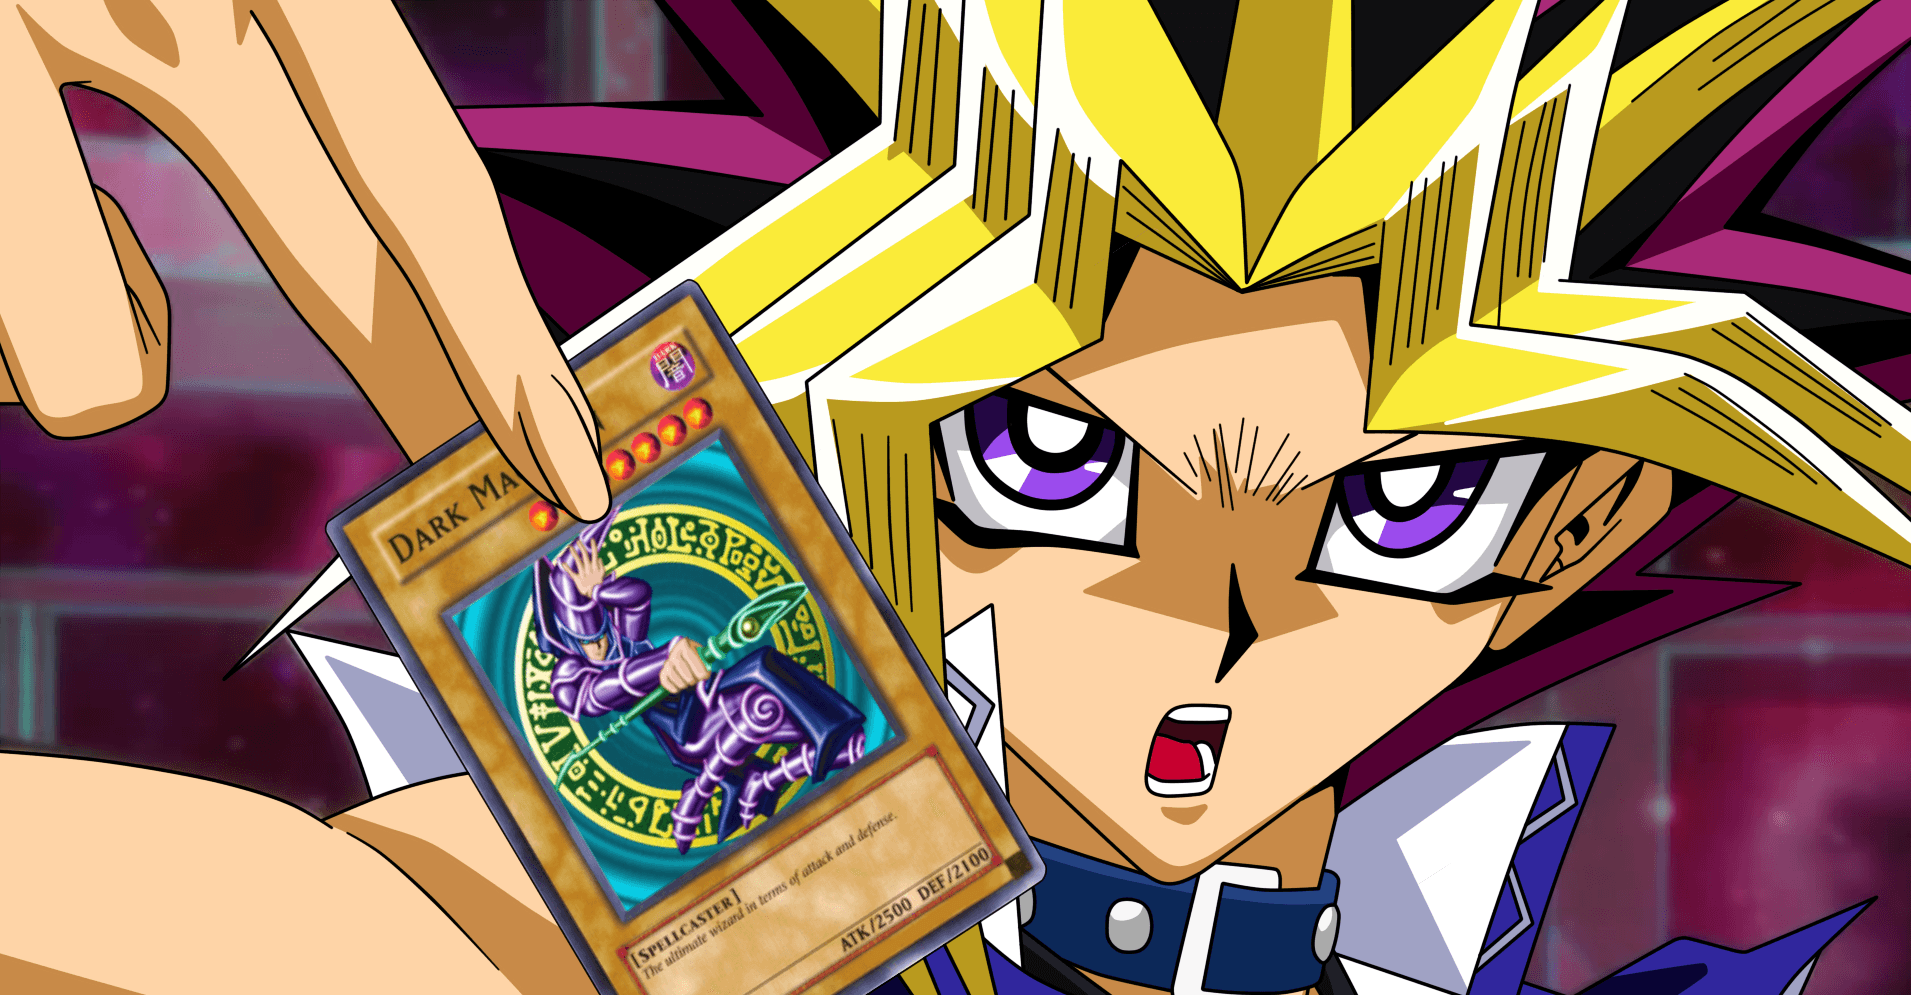 2. 1. Kalau bahas Yu-Gi-Oh! pasti langsung keinget card game-nya ya? 